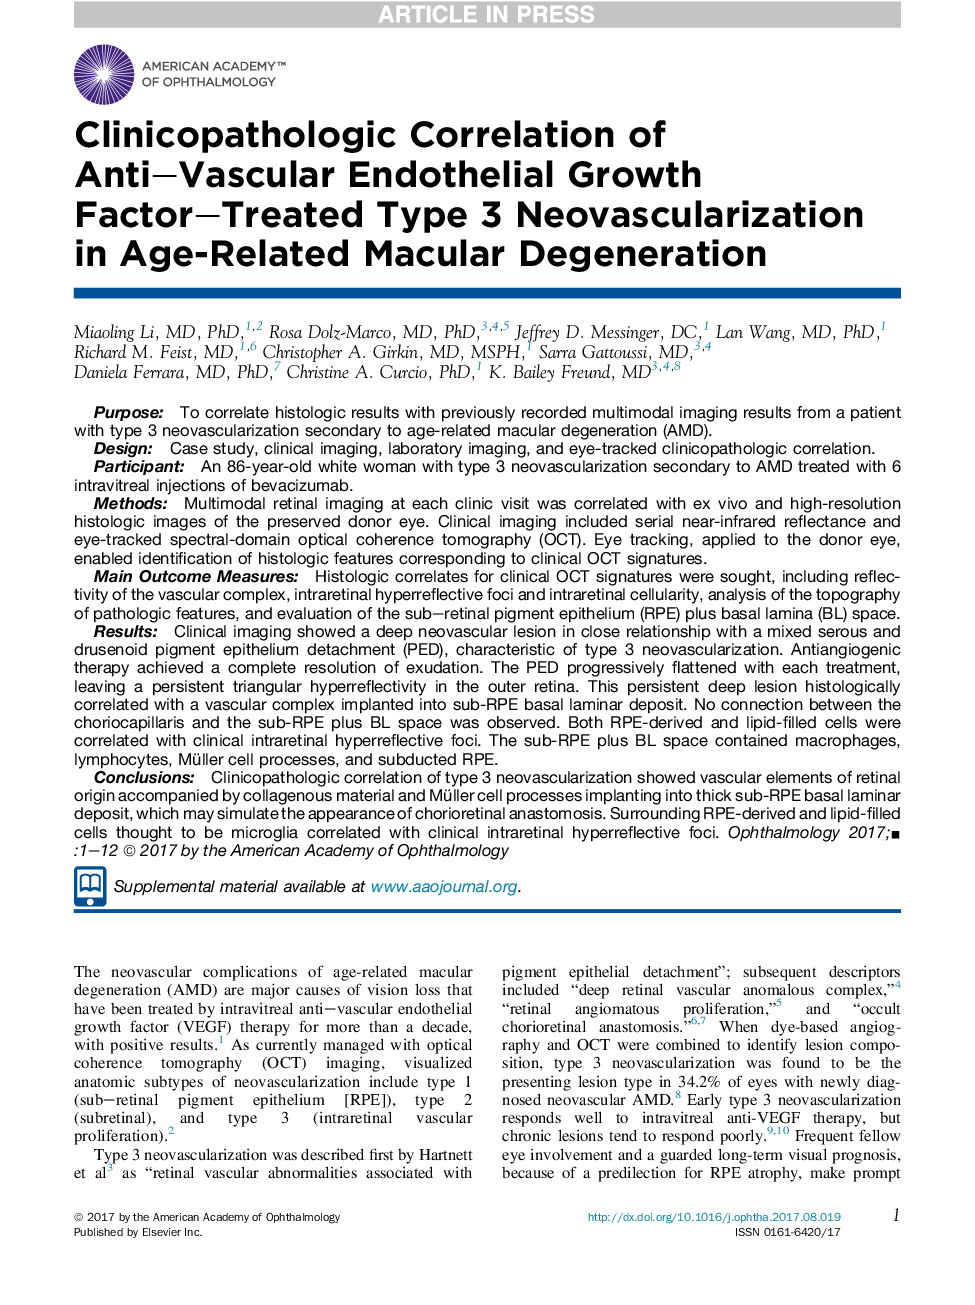 Clinicopathologic Correlation of Anti-Vascular Endothelial Growth Factor-Treated Type 3 Neovascularization inÂ Age-Related Macular Degeneration